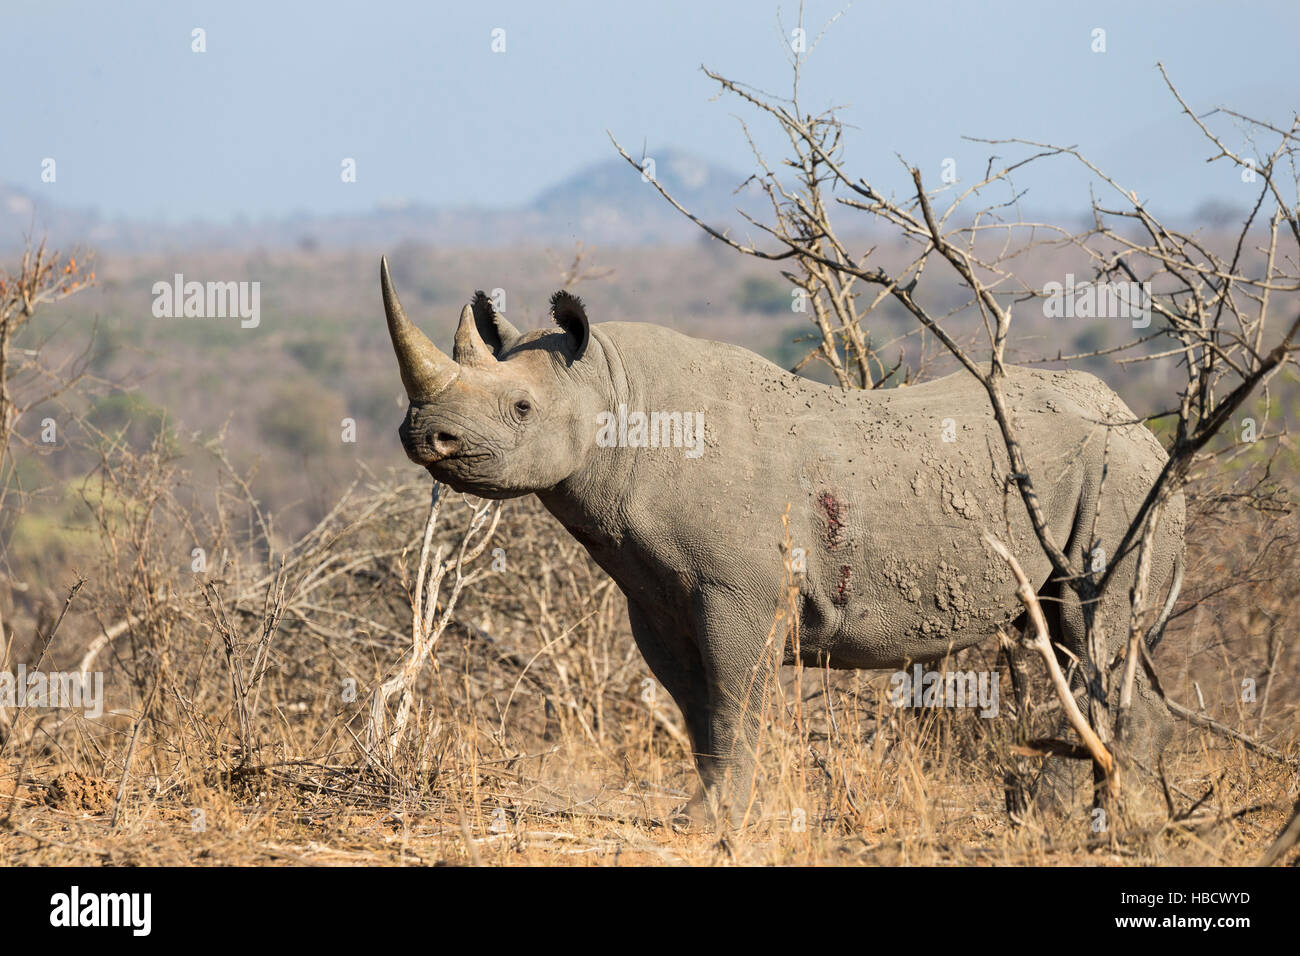 Black rhino (Diceros bicornis), Kruger national park, South Africa Stock Photo